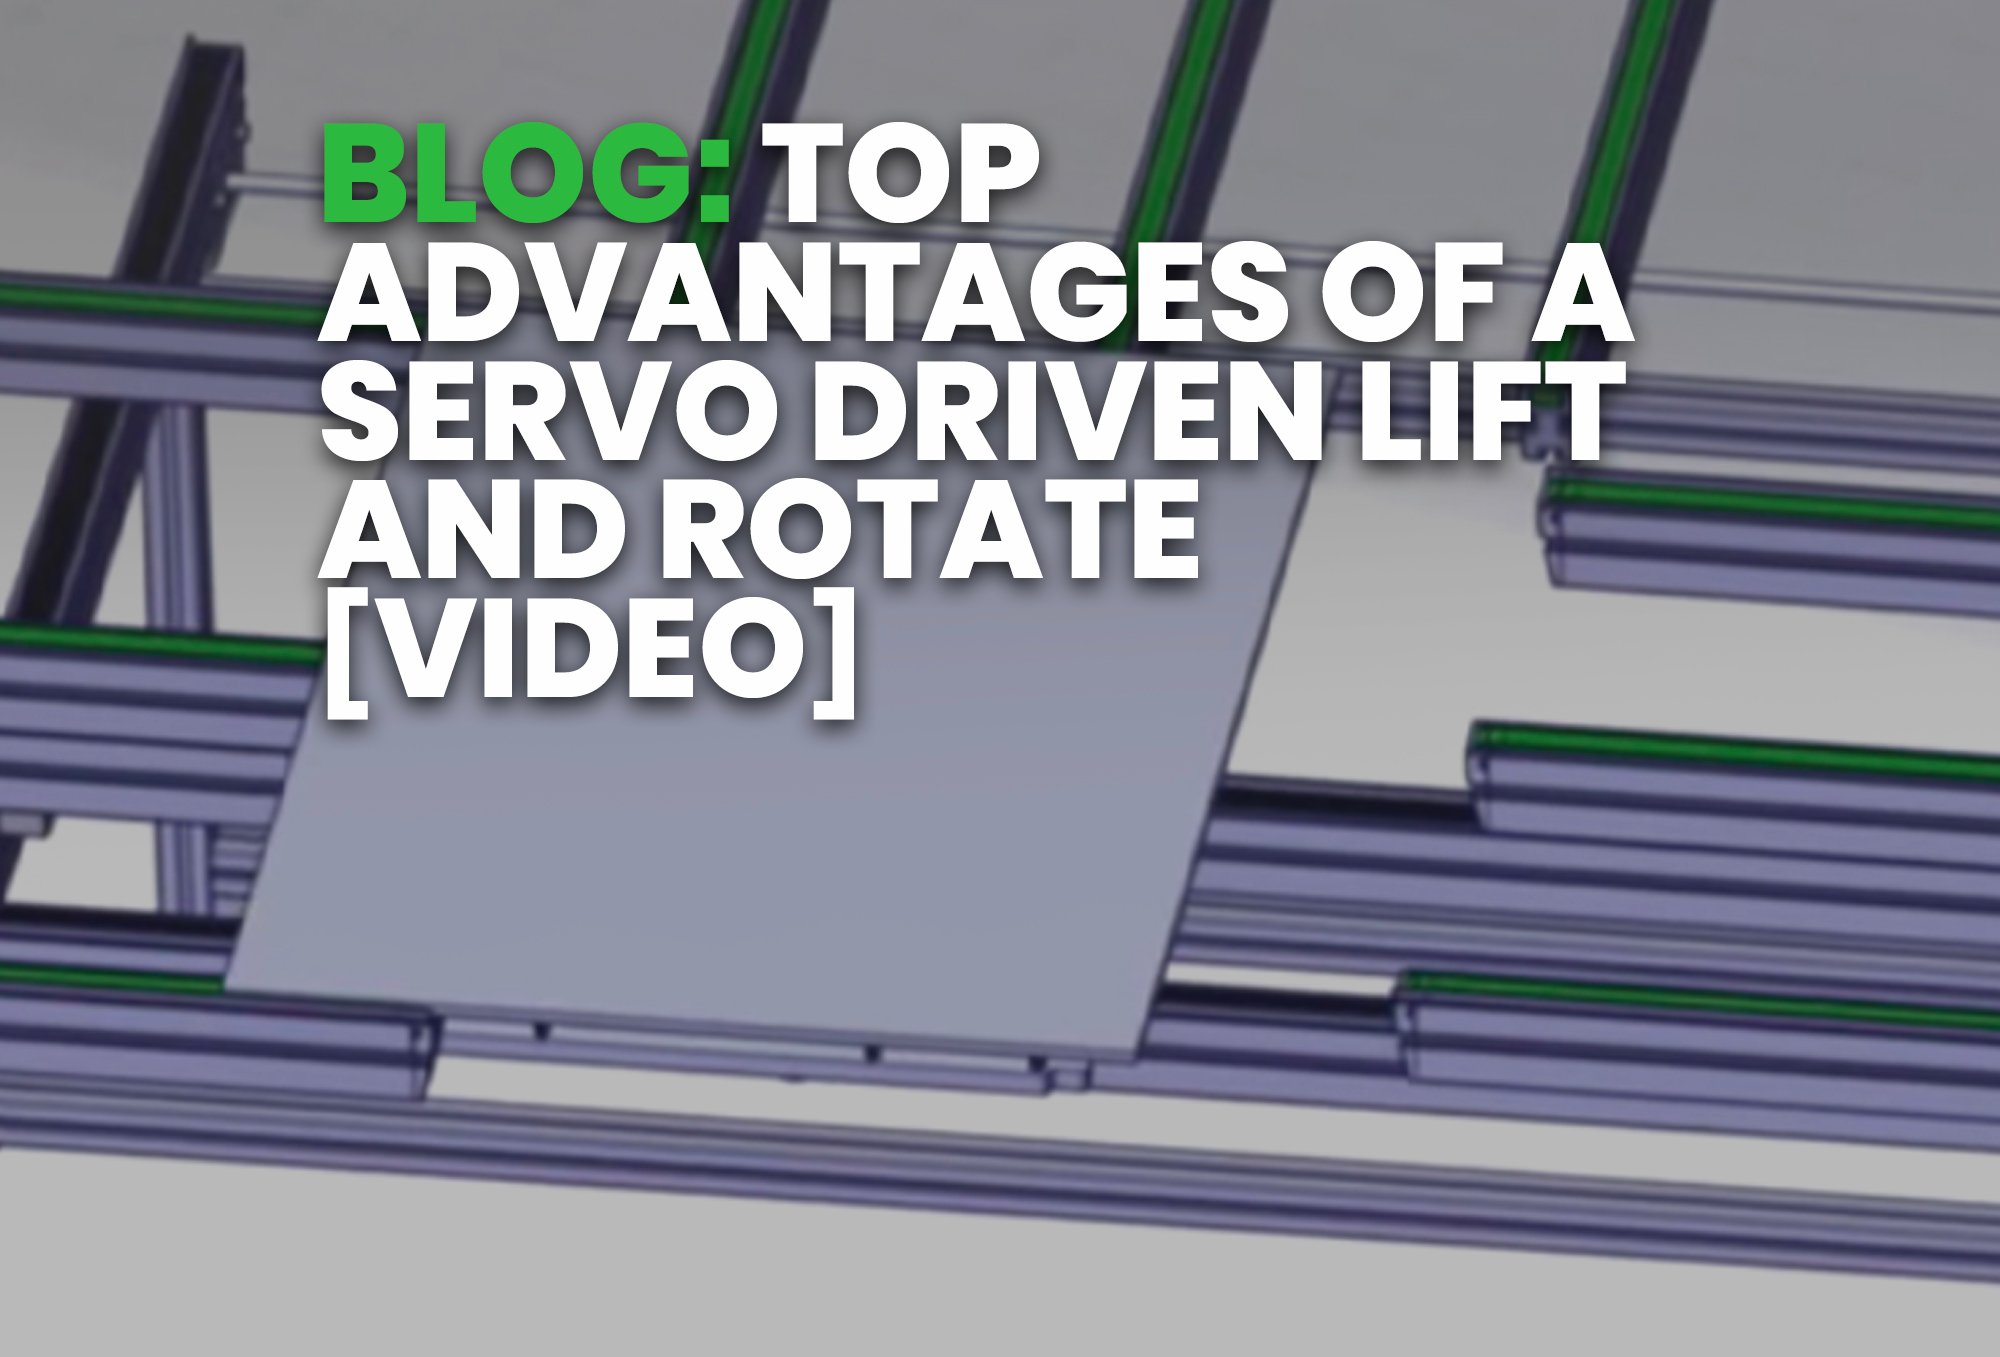 BLOG- Top Advantages of a Servo Driven Lift and Rotate [VIDEO]